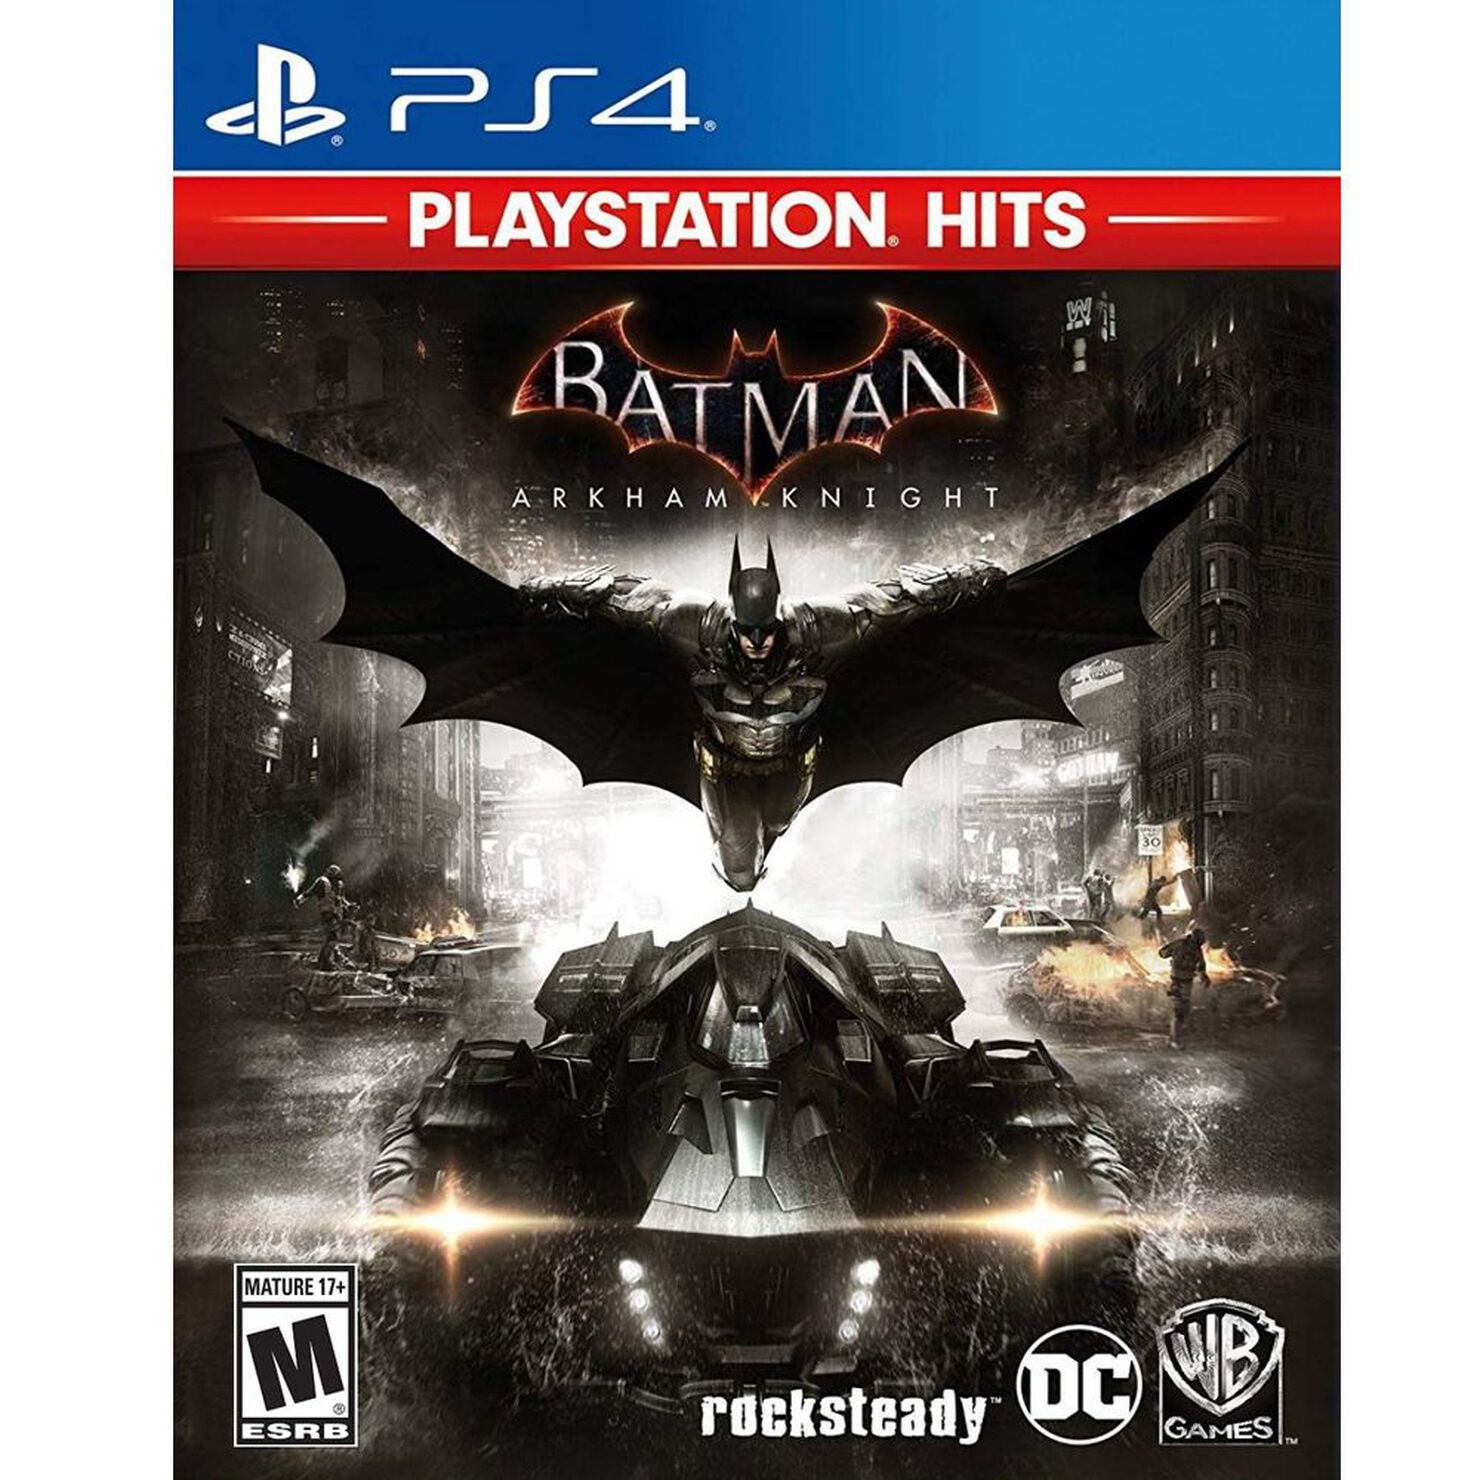 BATMAN ARKHAM KNIGHT PS4 - PS HITS 